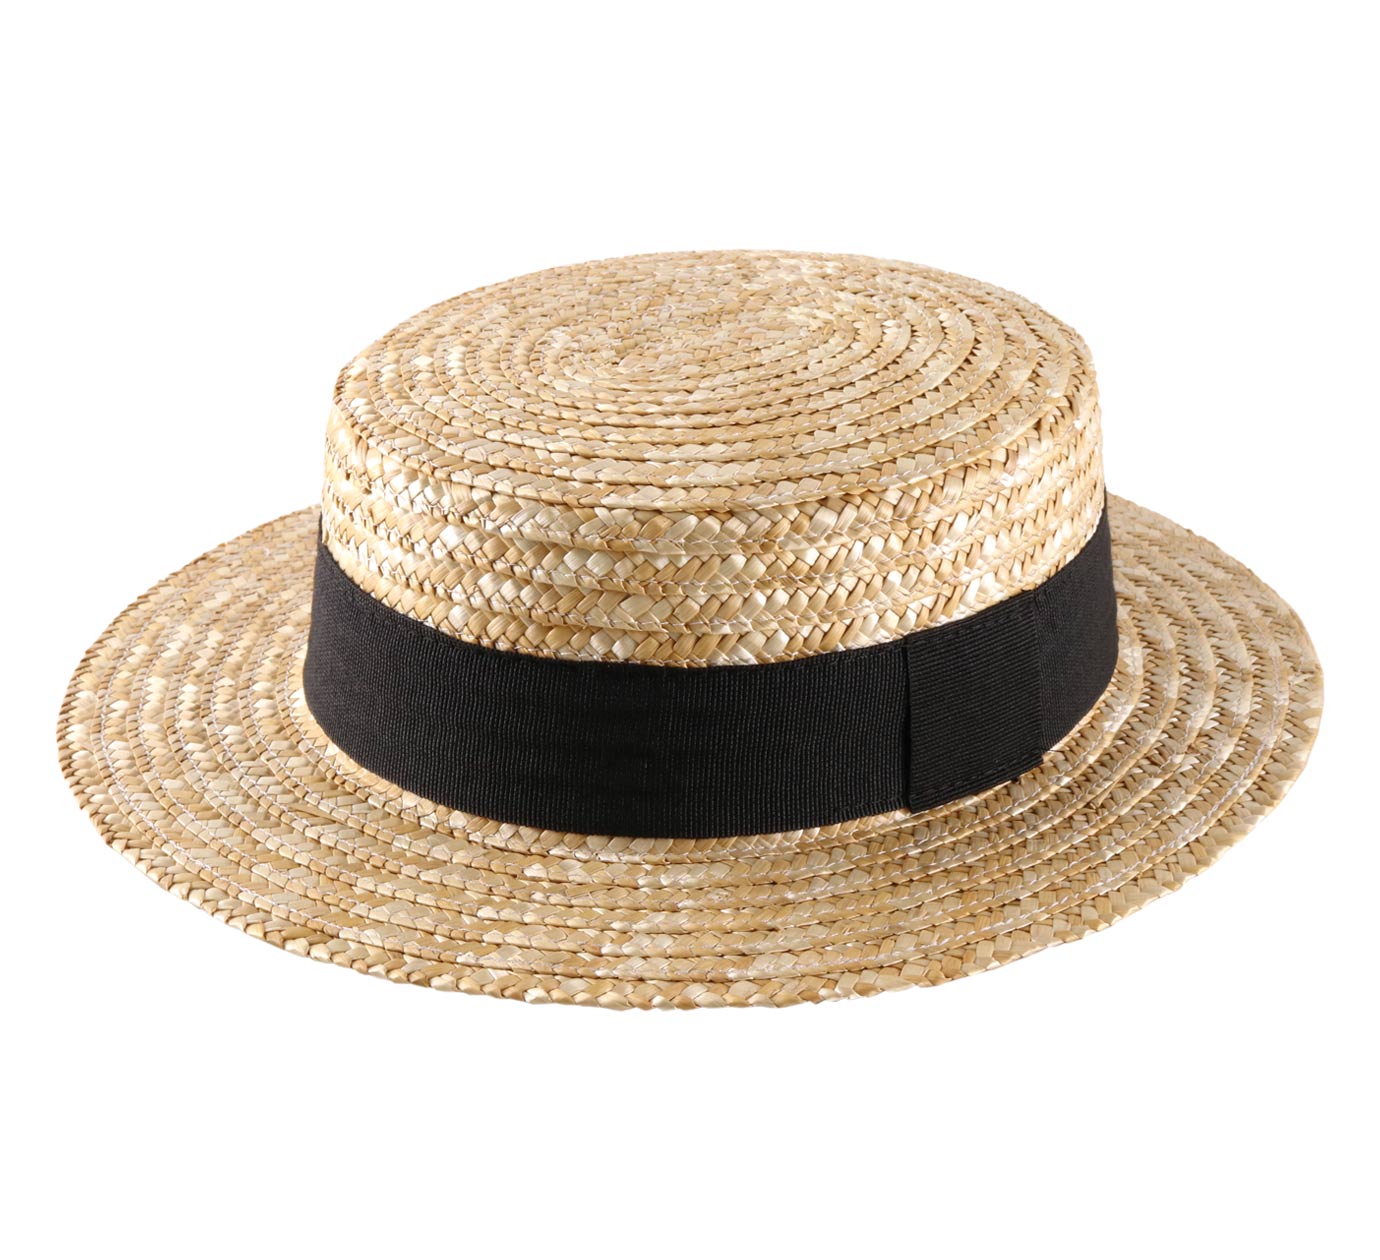 Classic Boater Straw Hats For Men & Women - Hats in the Belfry